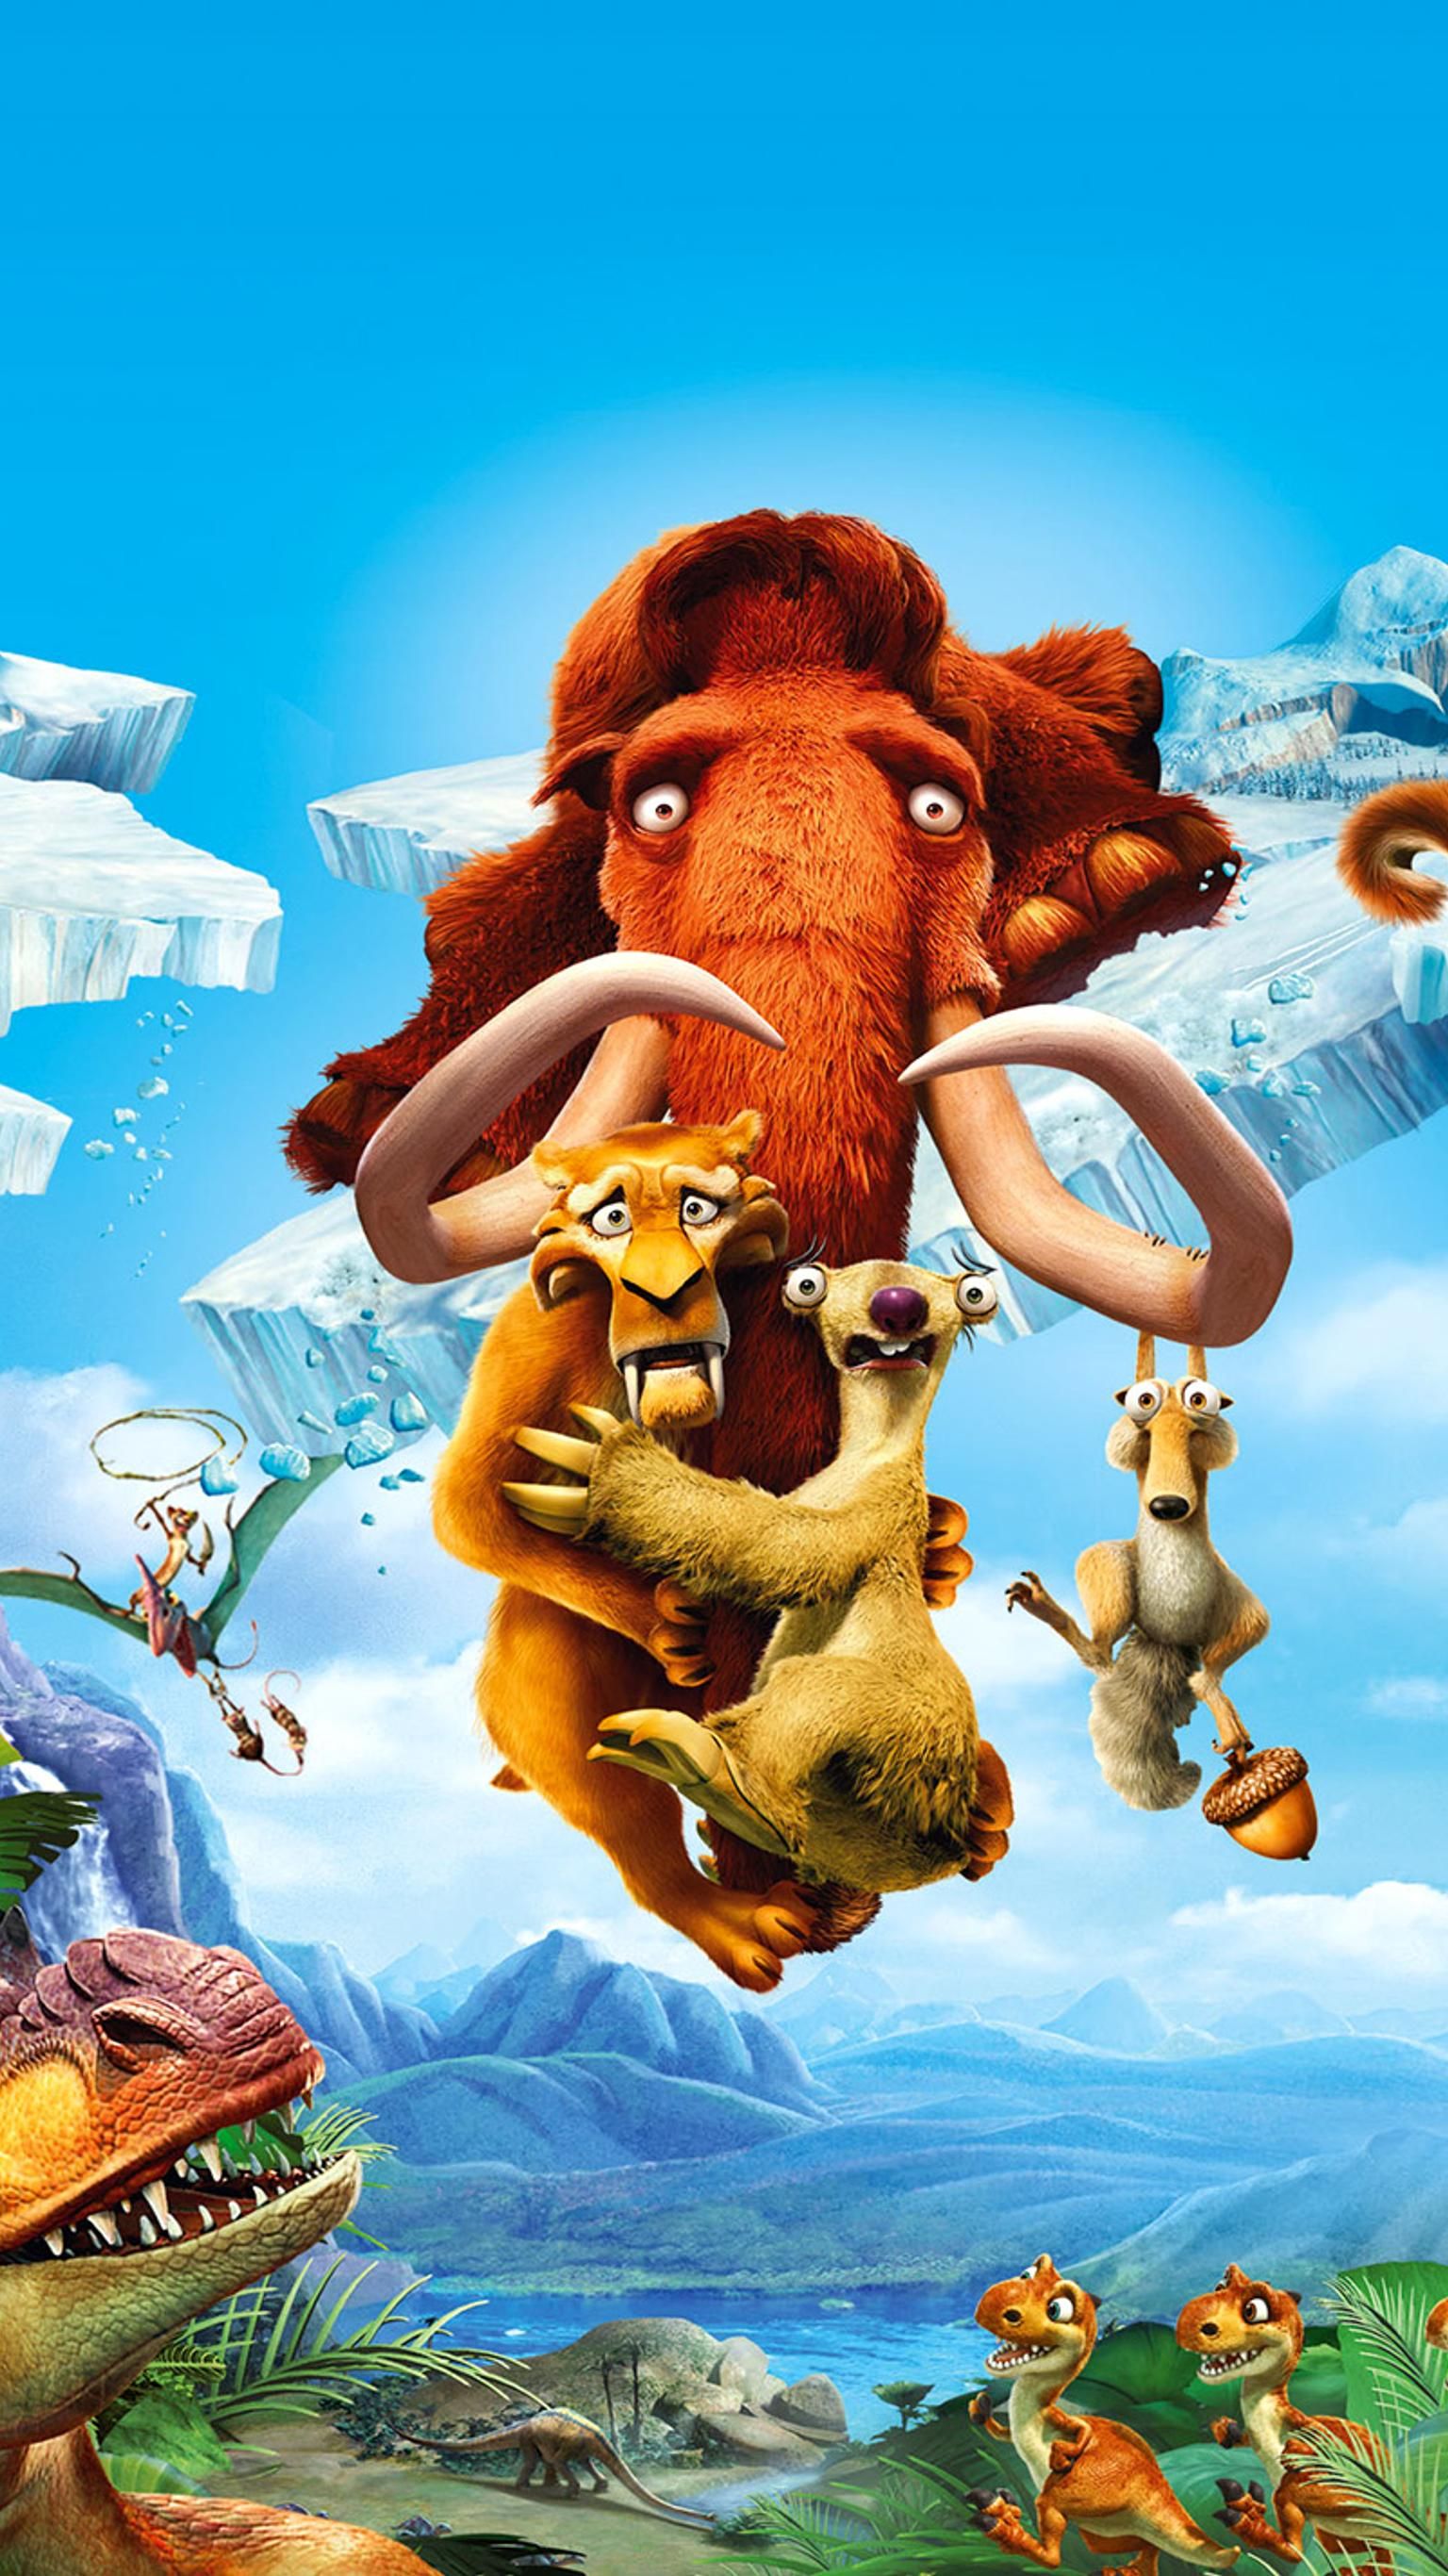 Ice Age: Dawn of the Dinosaurs (2009) Phone Wallpaper. Moviemania. Ice age, Ice age movies, Wallpaper iphone disney princess